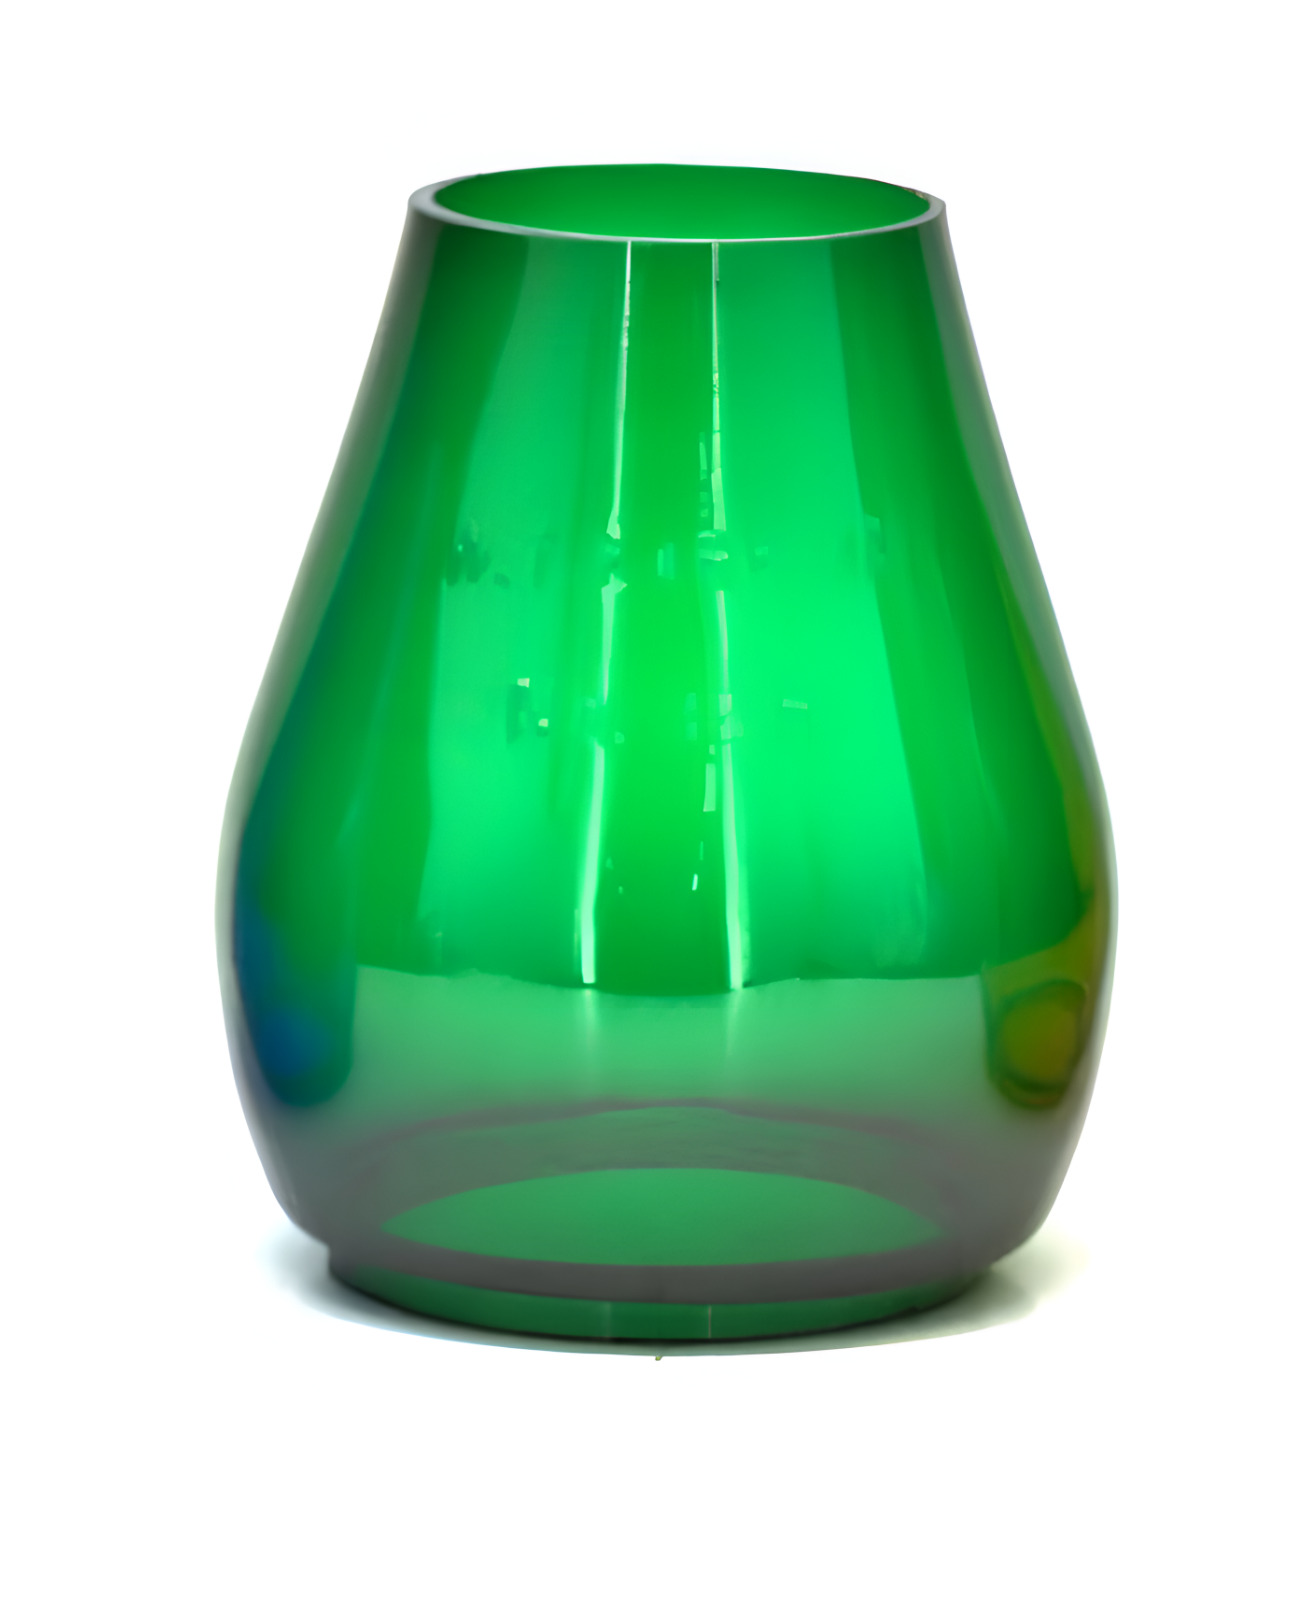 Railroad Lantern Green Globe Adlake Reliable Keystone Casey Dietz & CT Ham #39